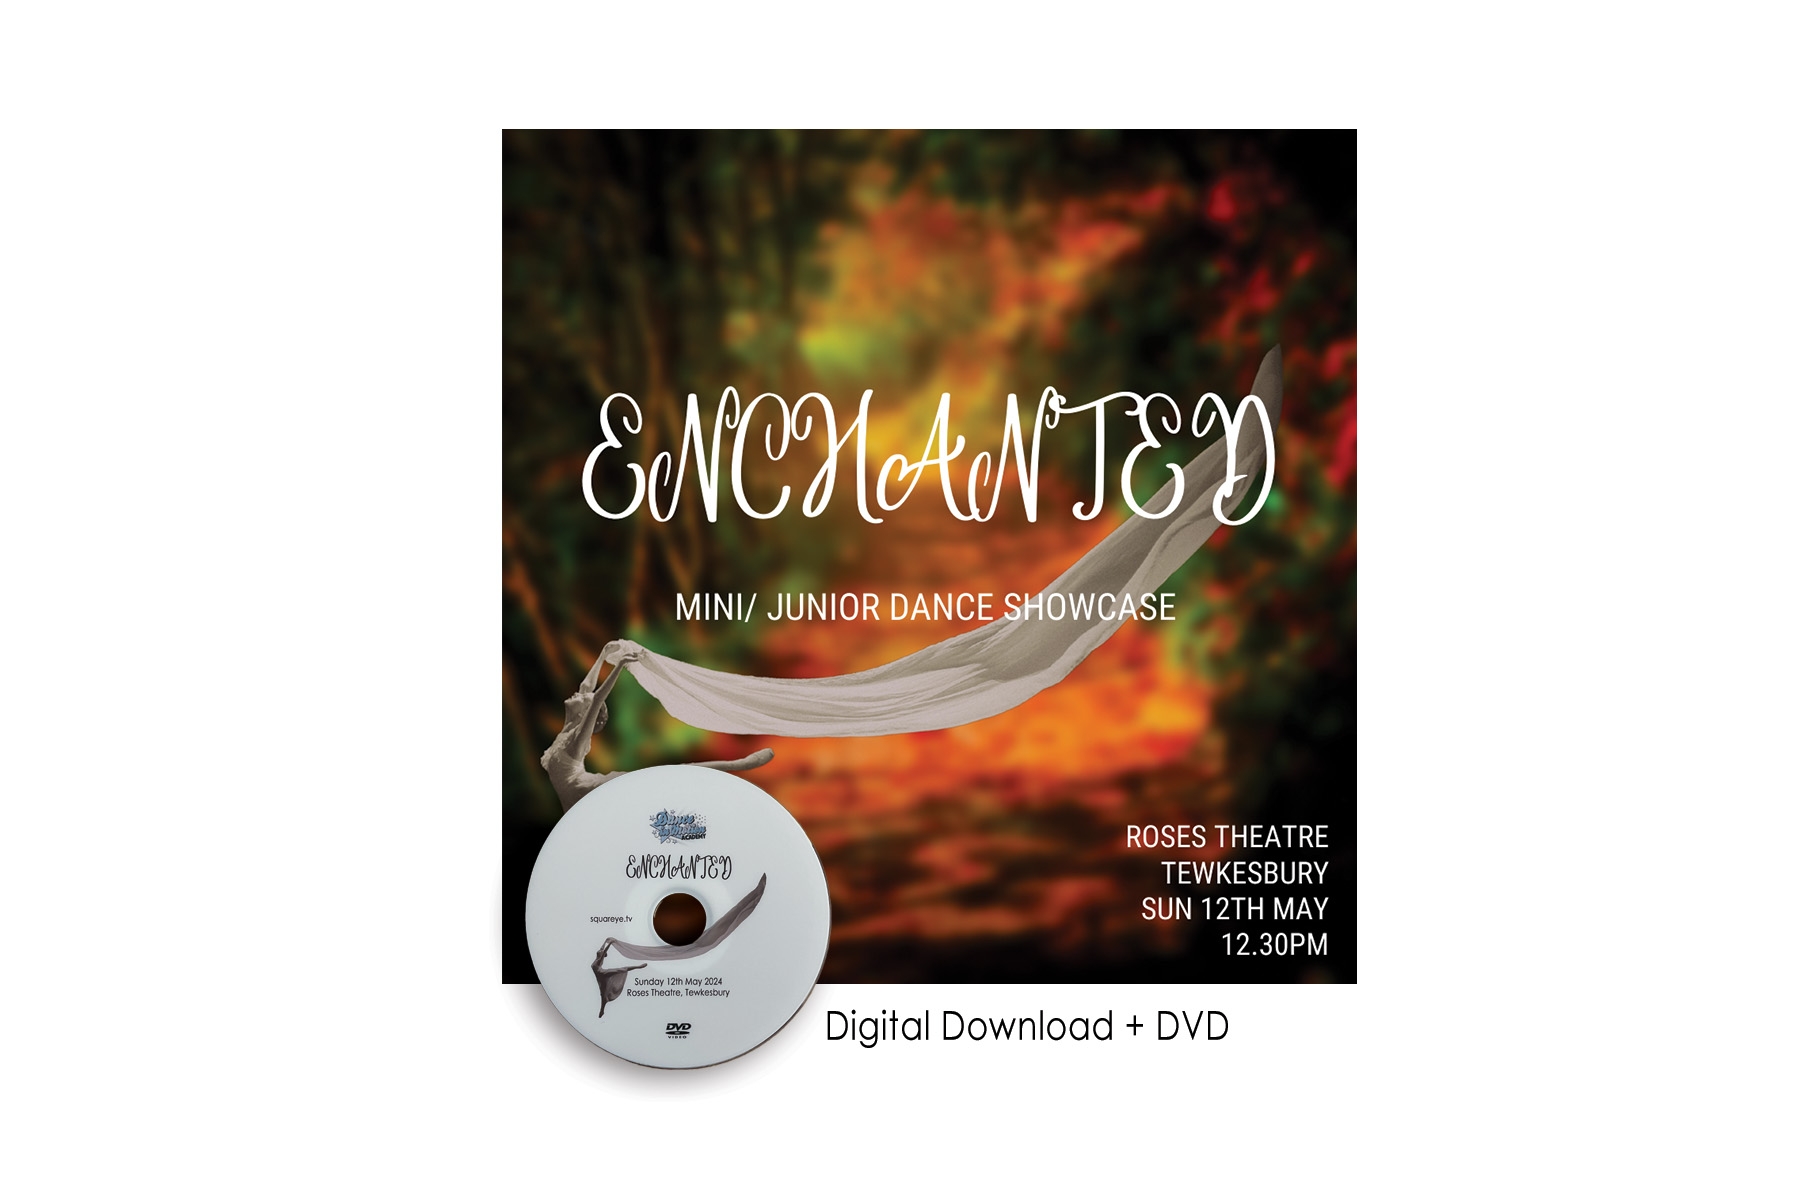 Dance in Motion ‘Enchanted’ – DIGITAL DOWNLOAD + DVD